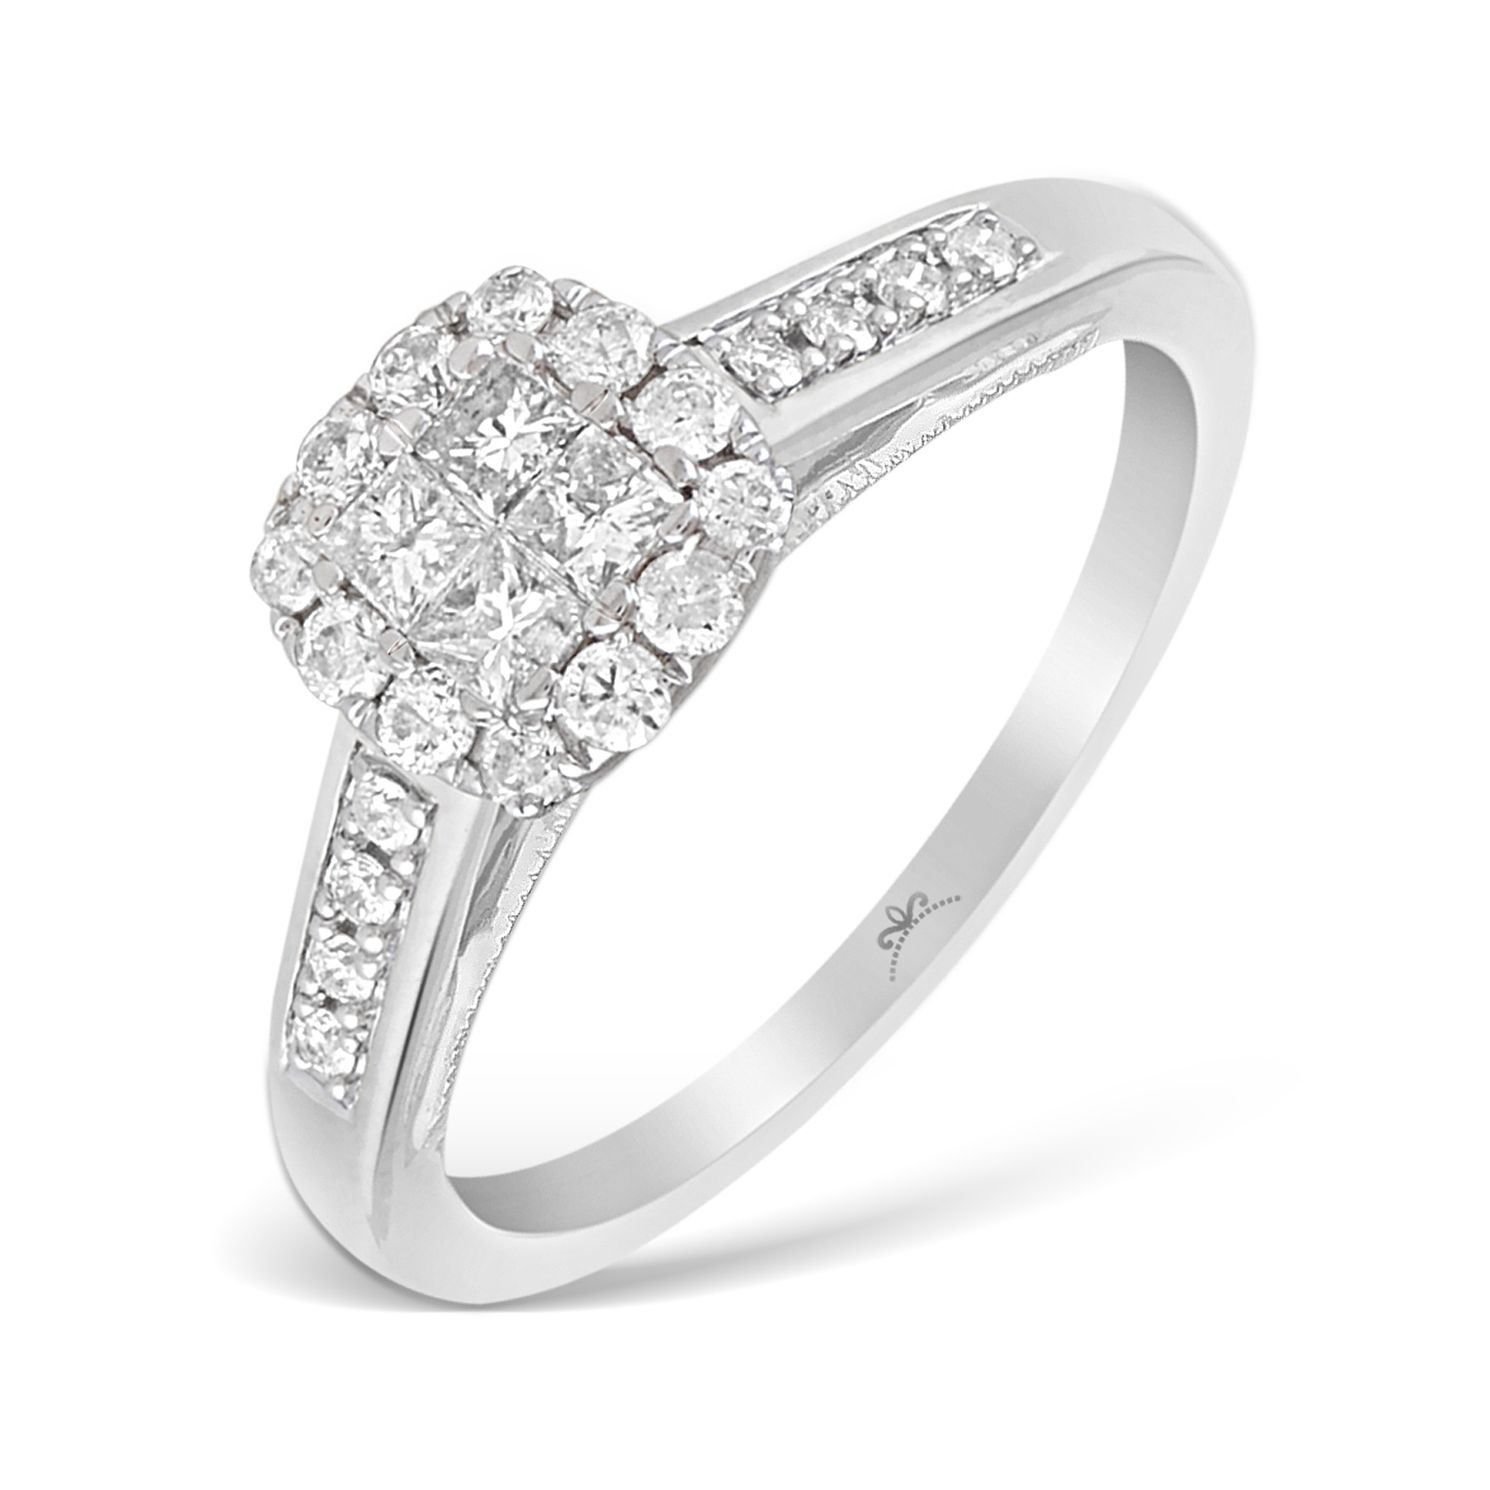 9ct White Gold 1/2 Carat Princessa Diamond Cluster Ring | H.Samuel